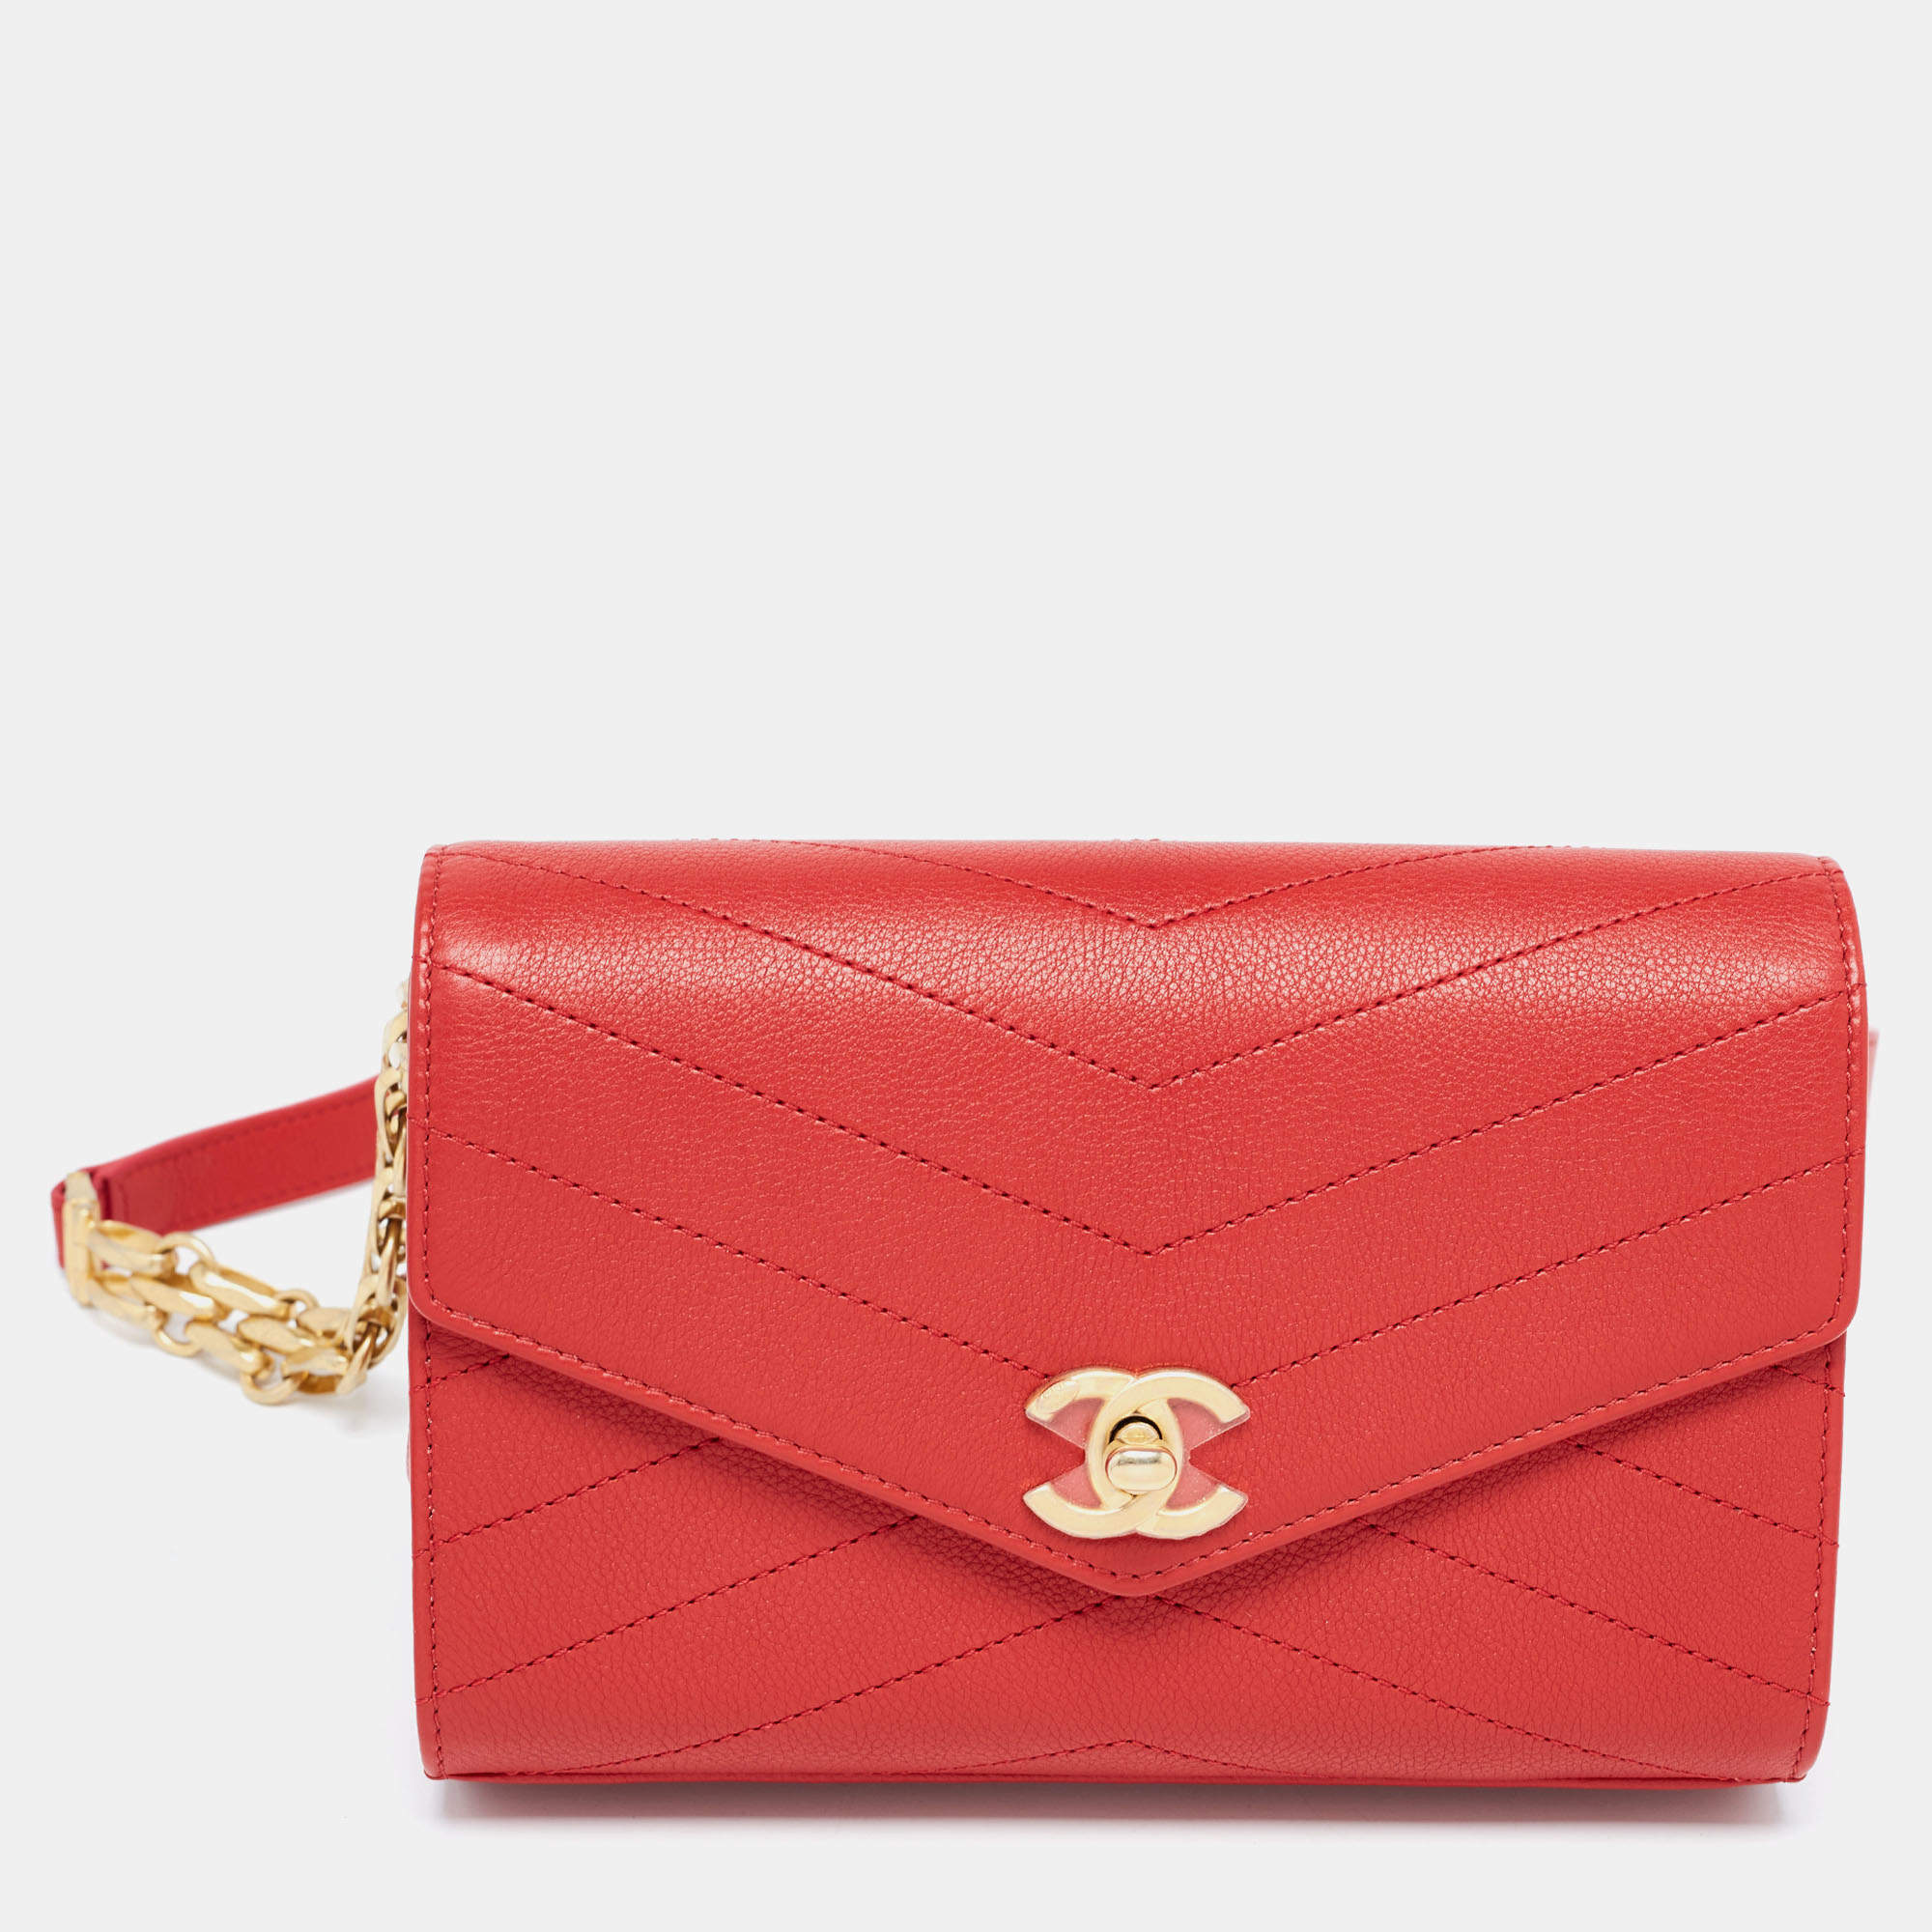 Chanel Red Chevron Leather Coco Waist Belt Bag